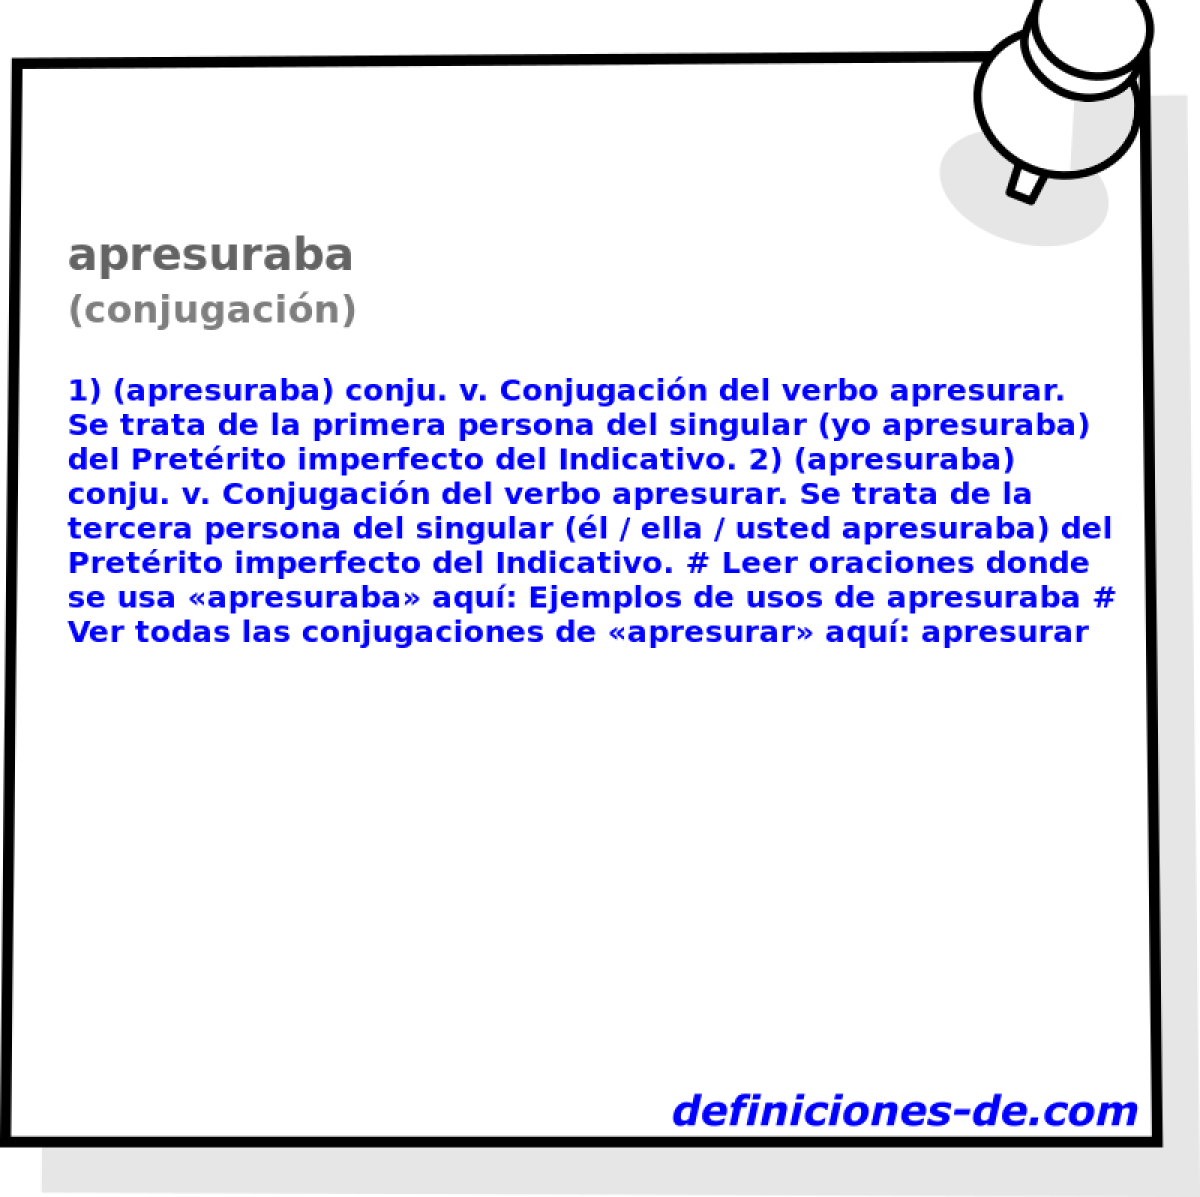 apresuraba (conjugacin)